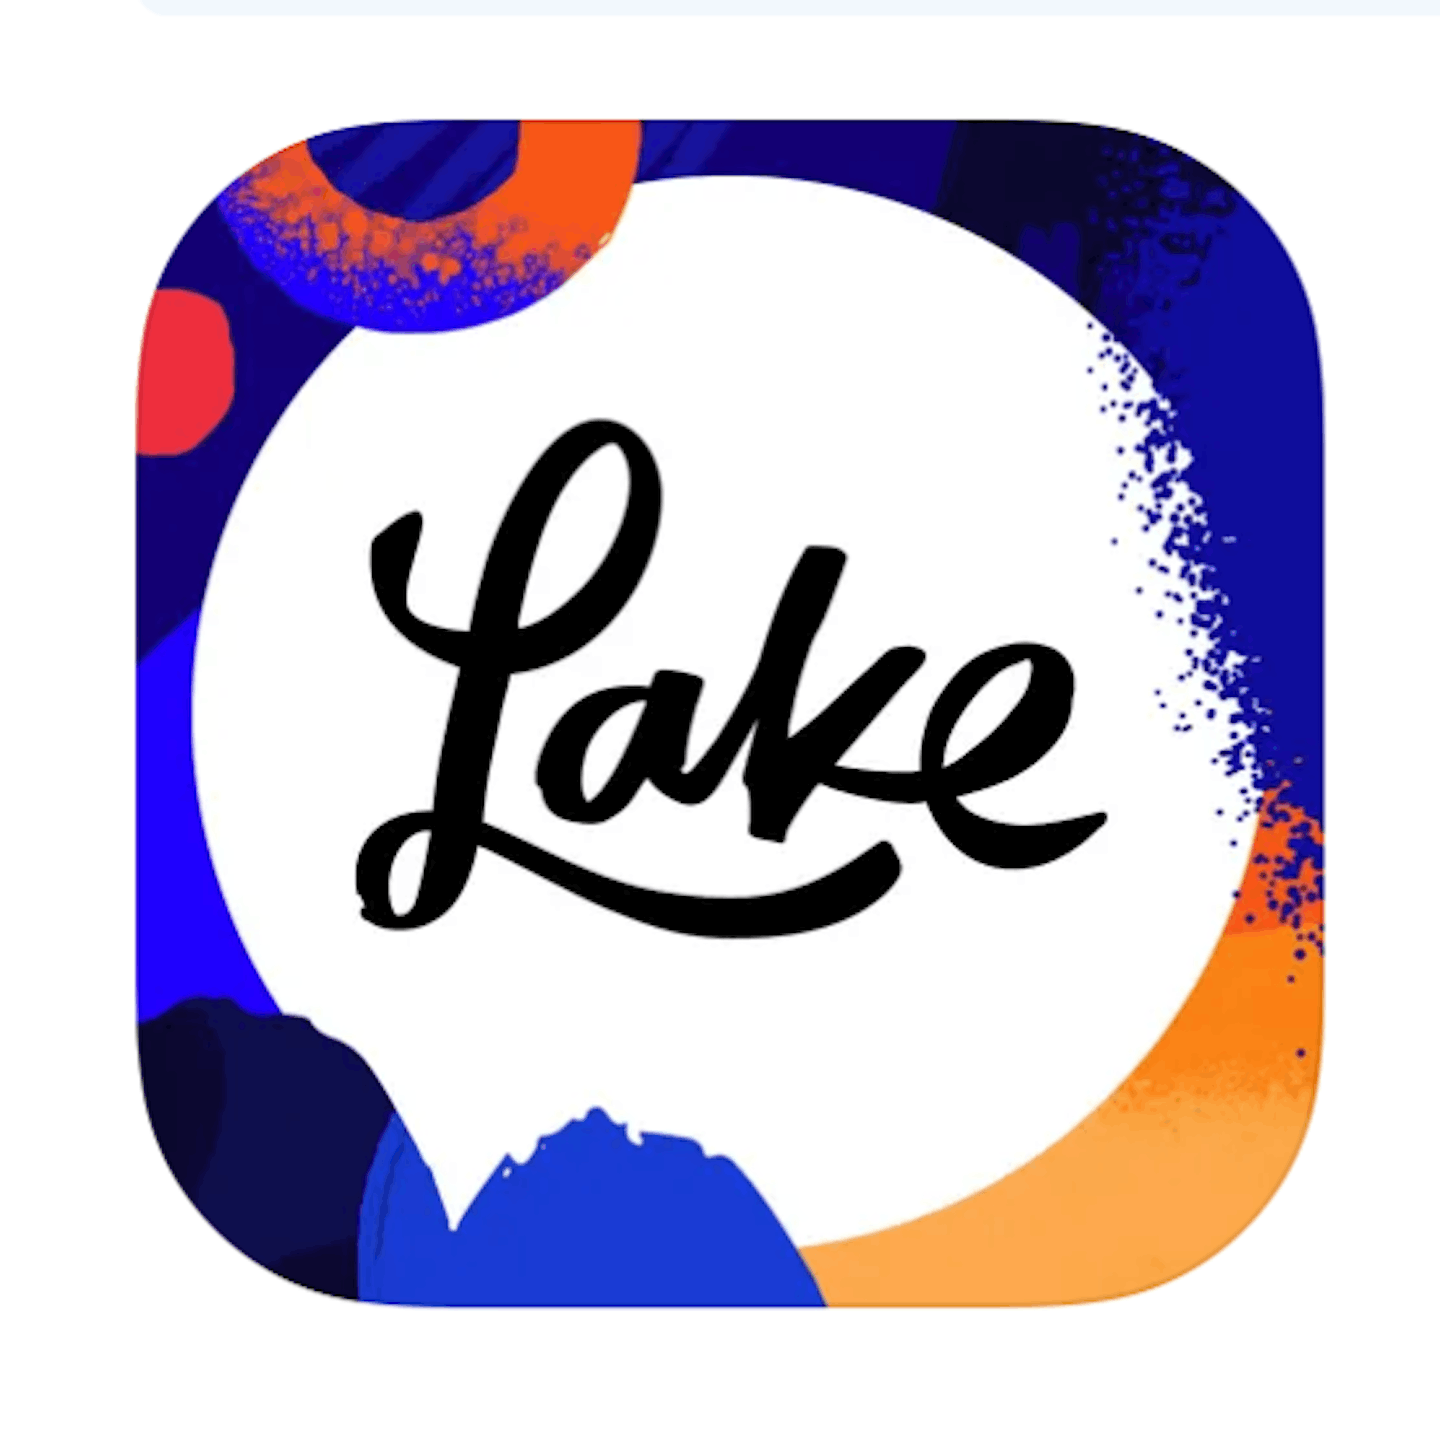 Lake colouring app